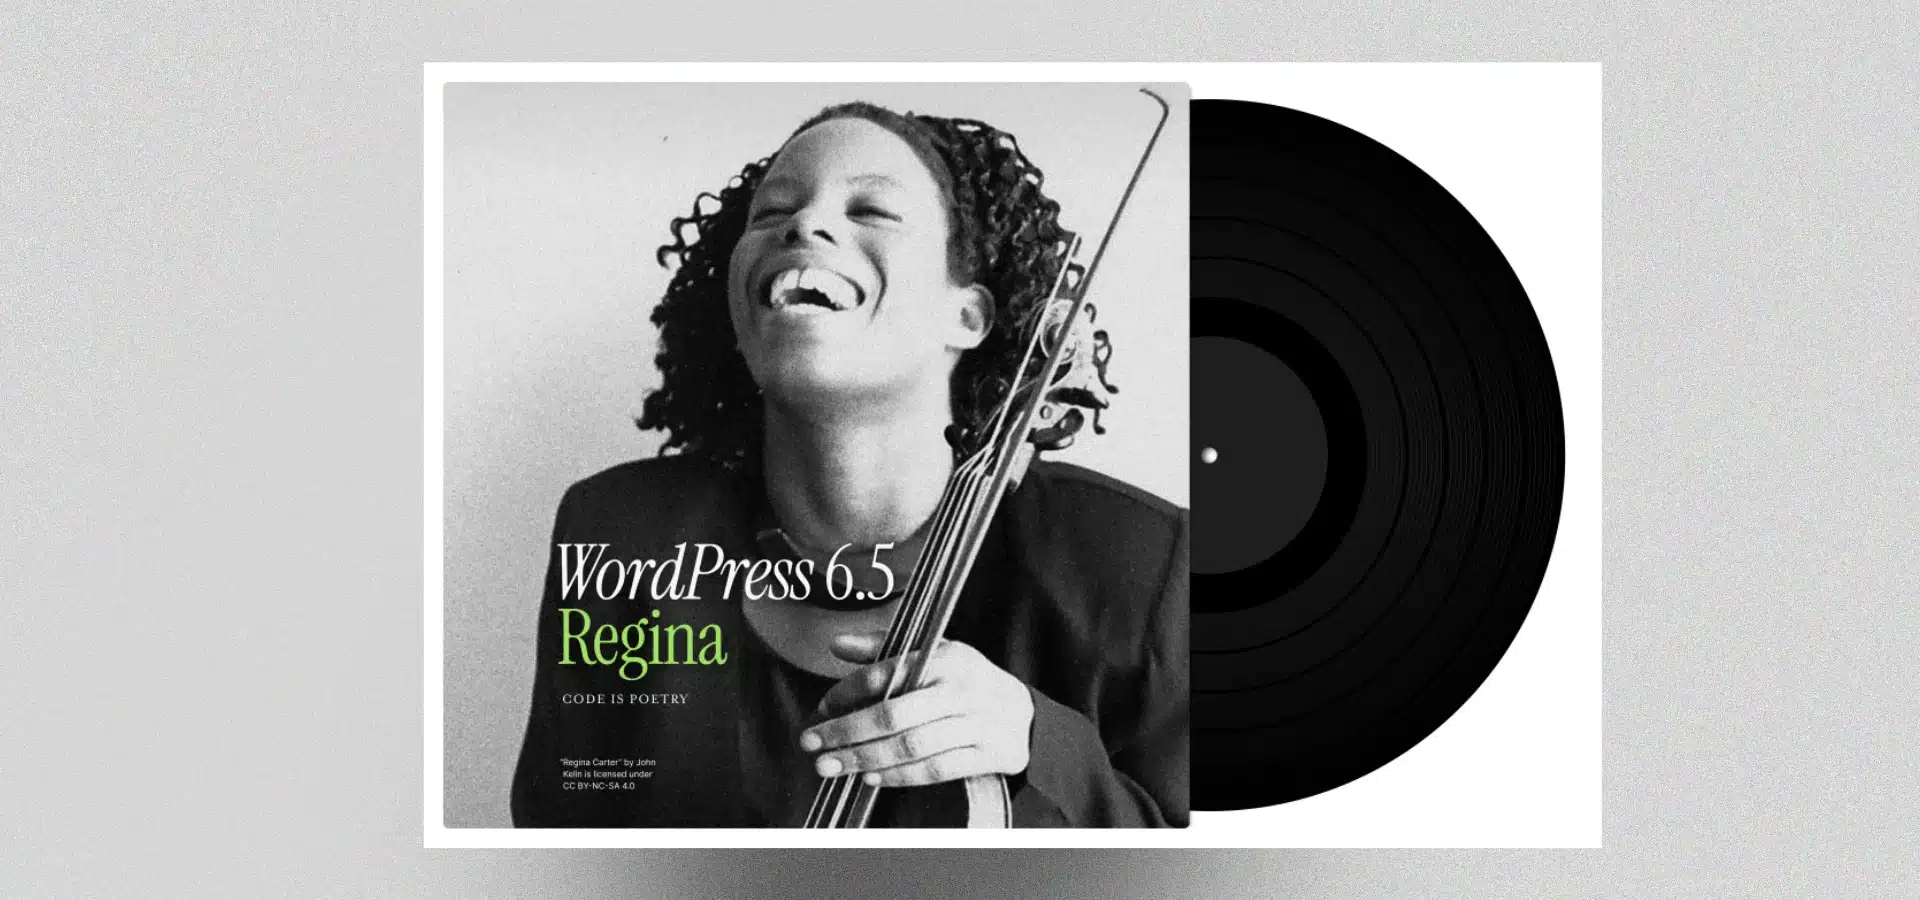 Saludá a WordPress 6.5 “Regina”